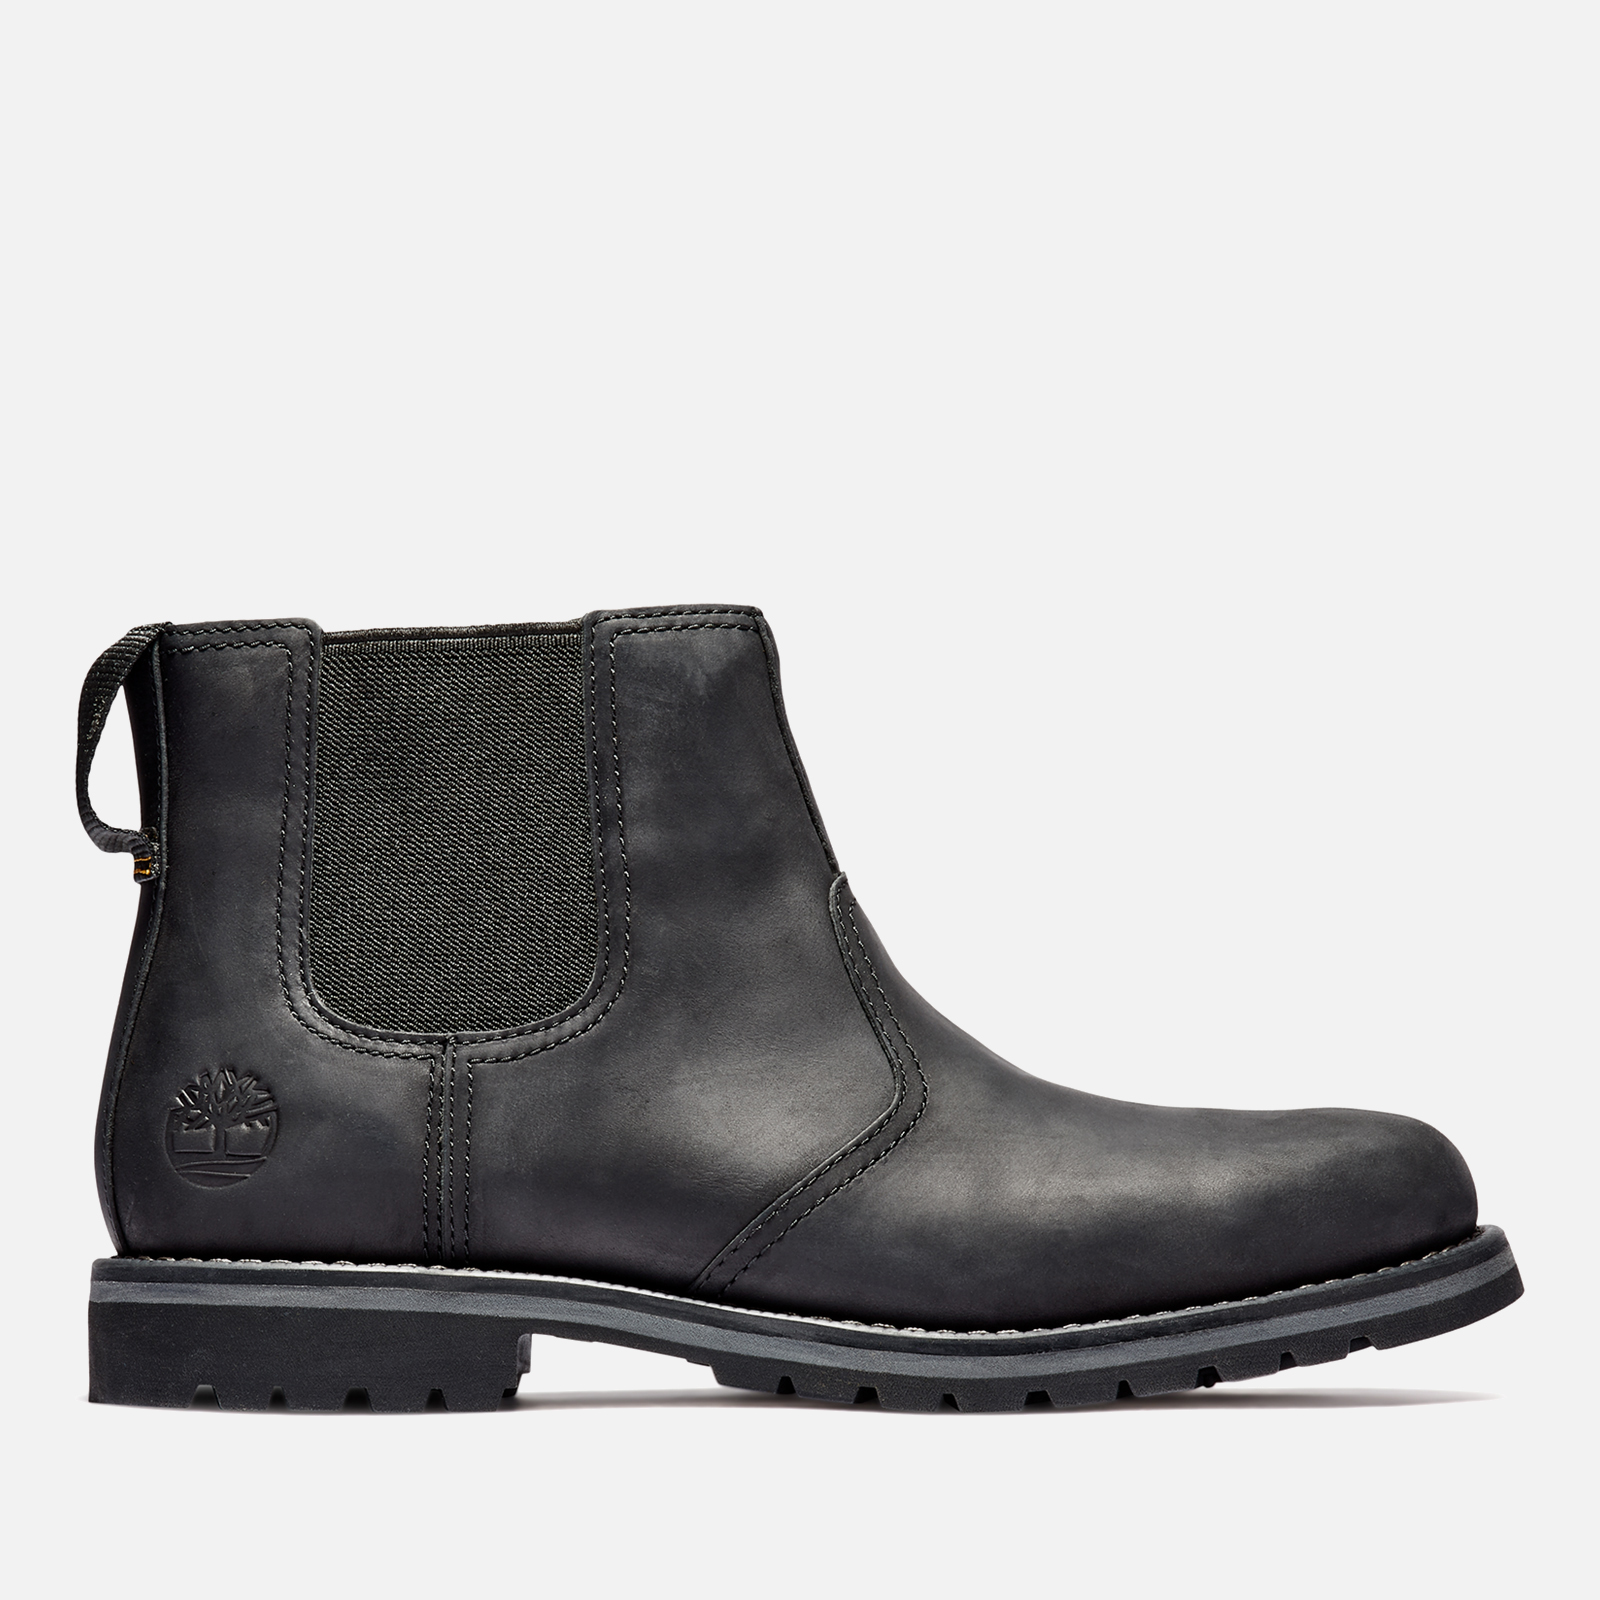 Timberland Men's Larchmont Leather Chelsea Boots - Black | Allsole